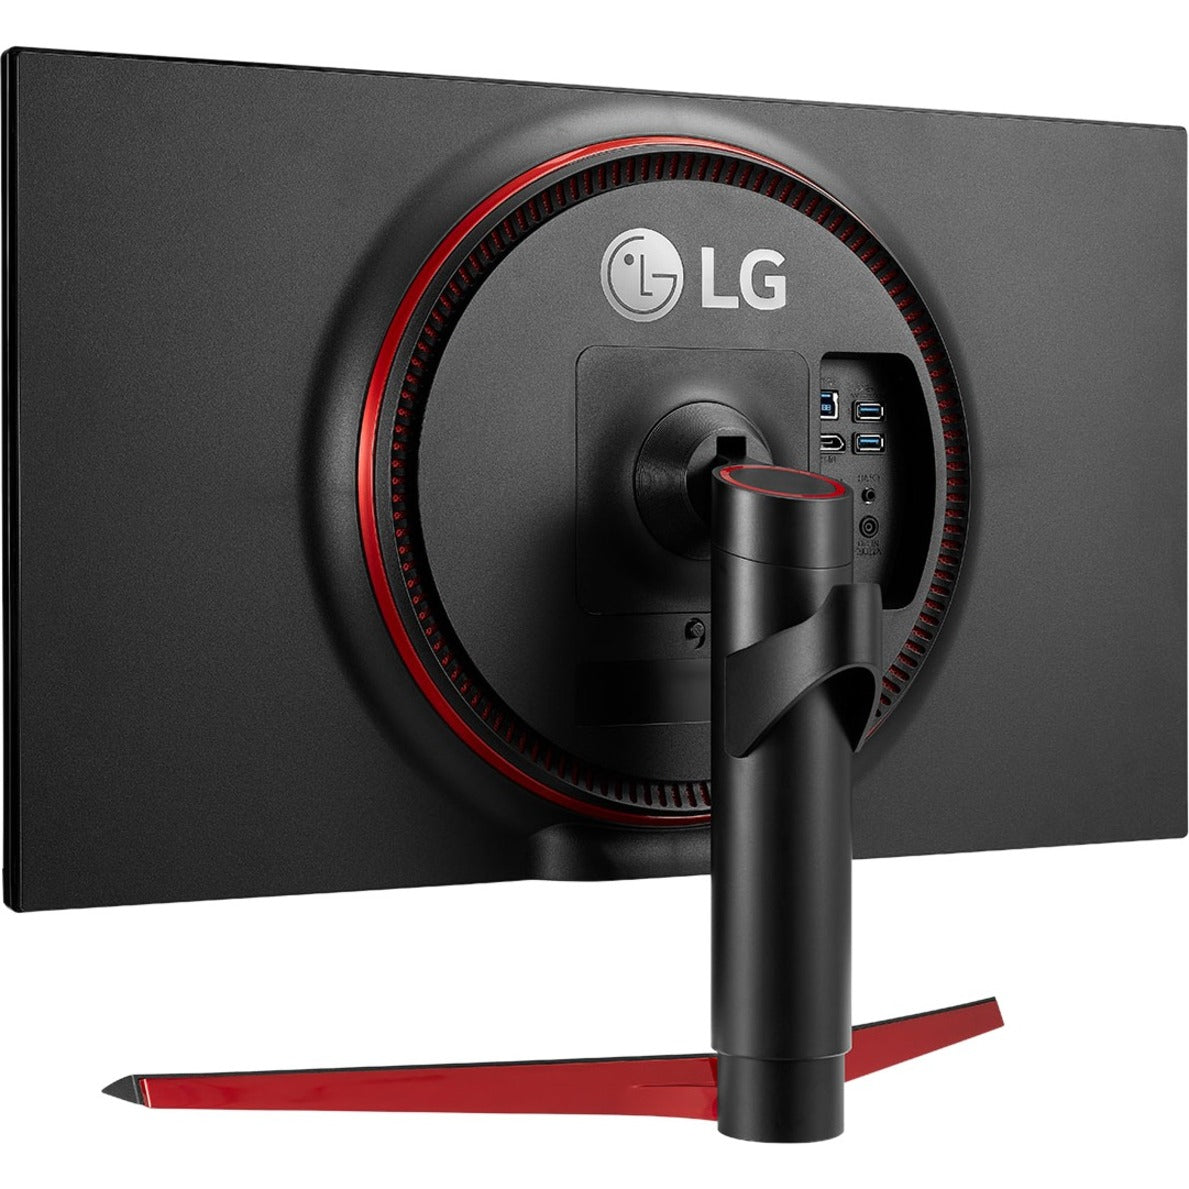 LG 27GN75B-B UltraGear 27" Full HD Gaming LCD Monitor, 240Hz Refresh Rate, FreeSync